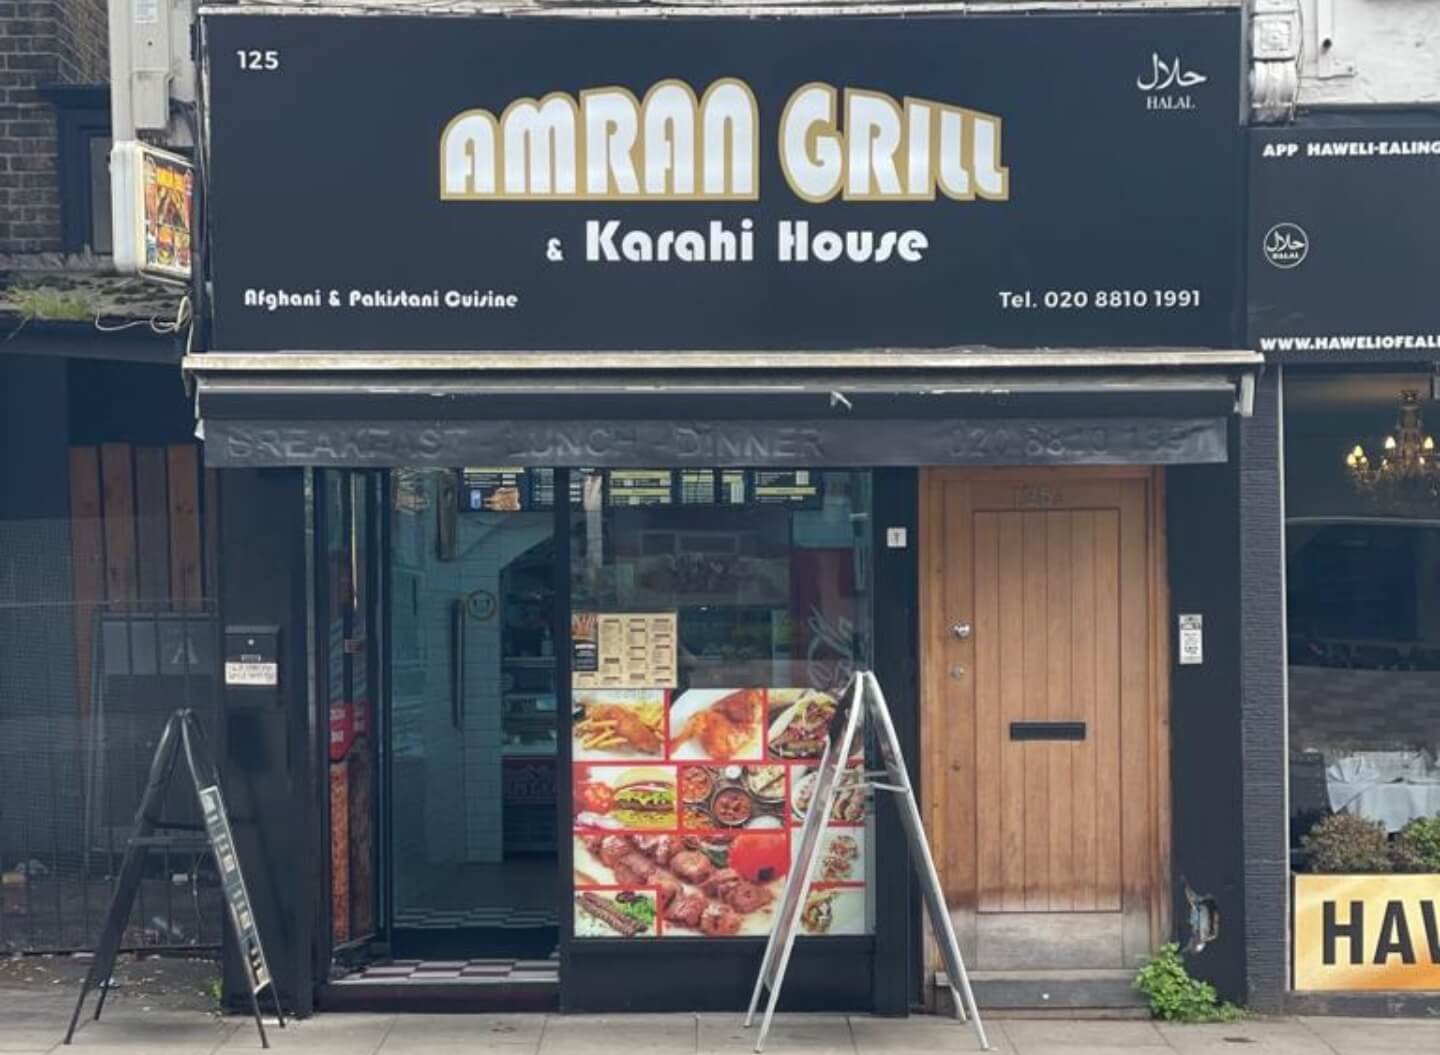 Amran Grill And Karahi House